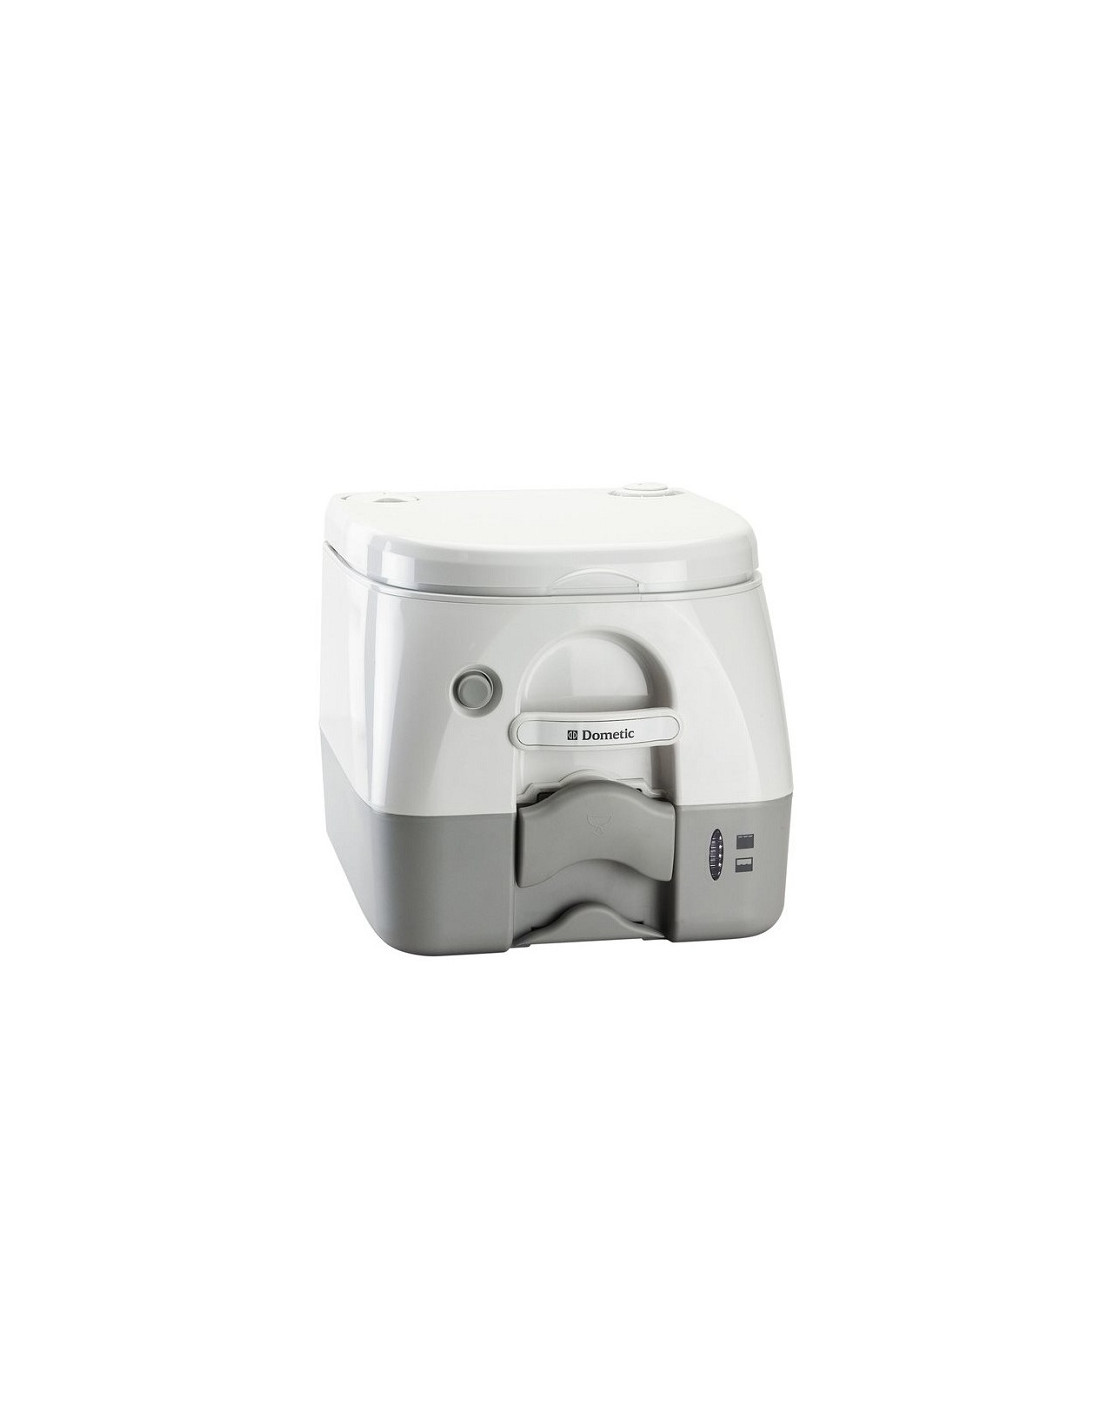 WC portátil descarga agua a presión, blanco/beige. Dometic Poti 972